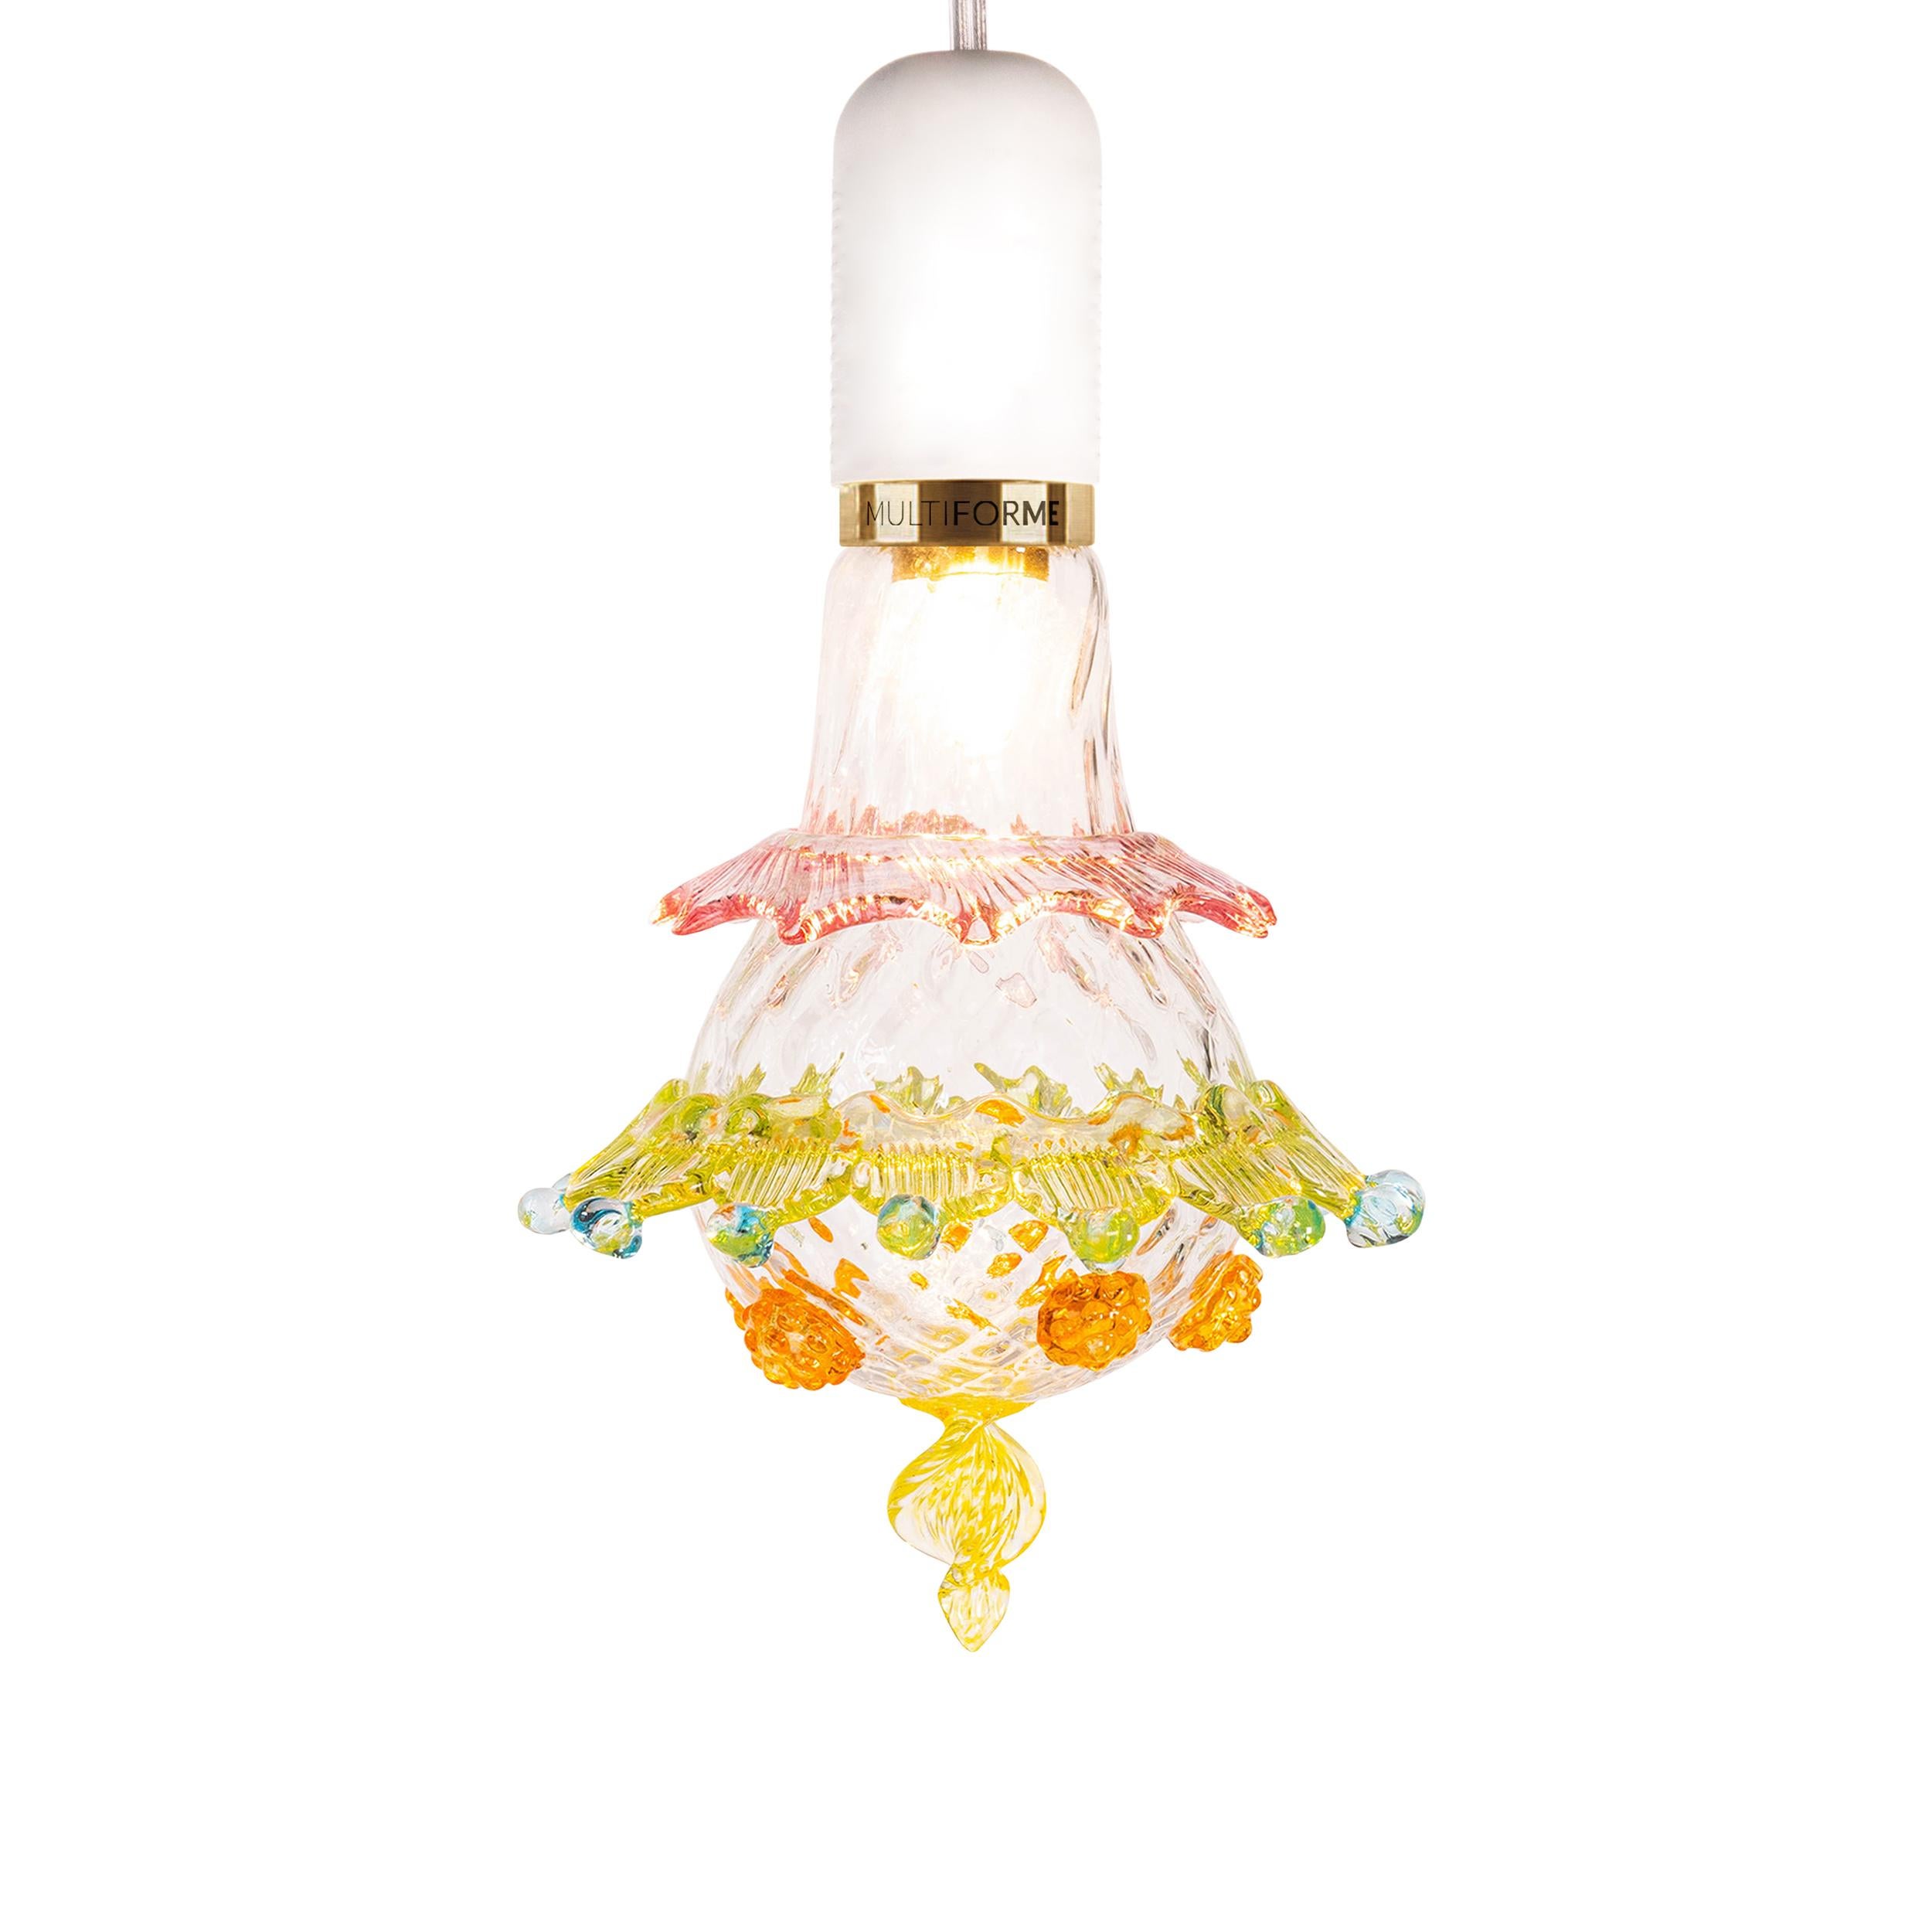 Italian Artistic glass lightbulb chandelier Murano Bulb Marcantonio X Multiforme #12 For Sale